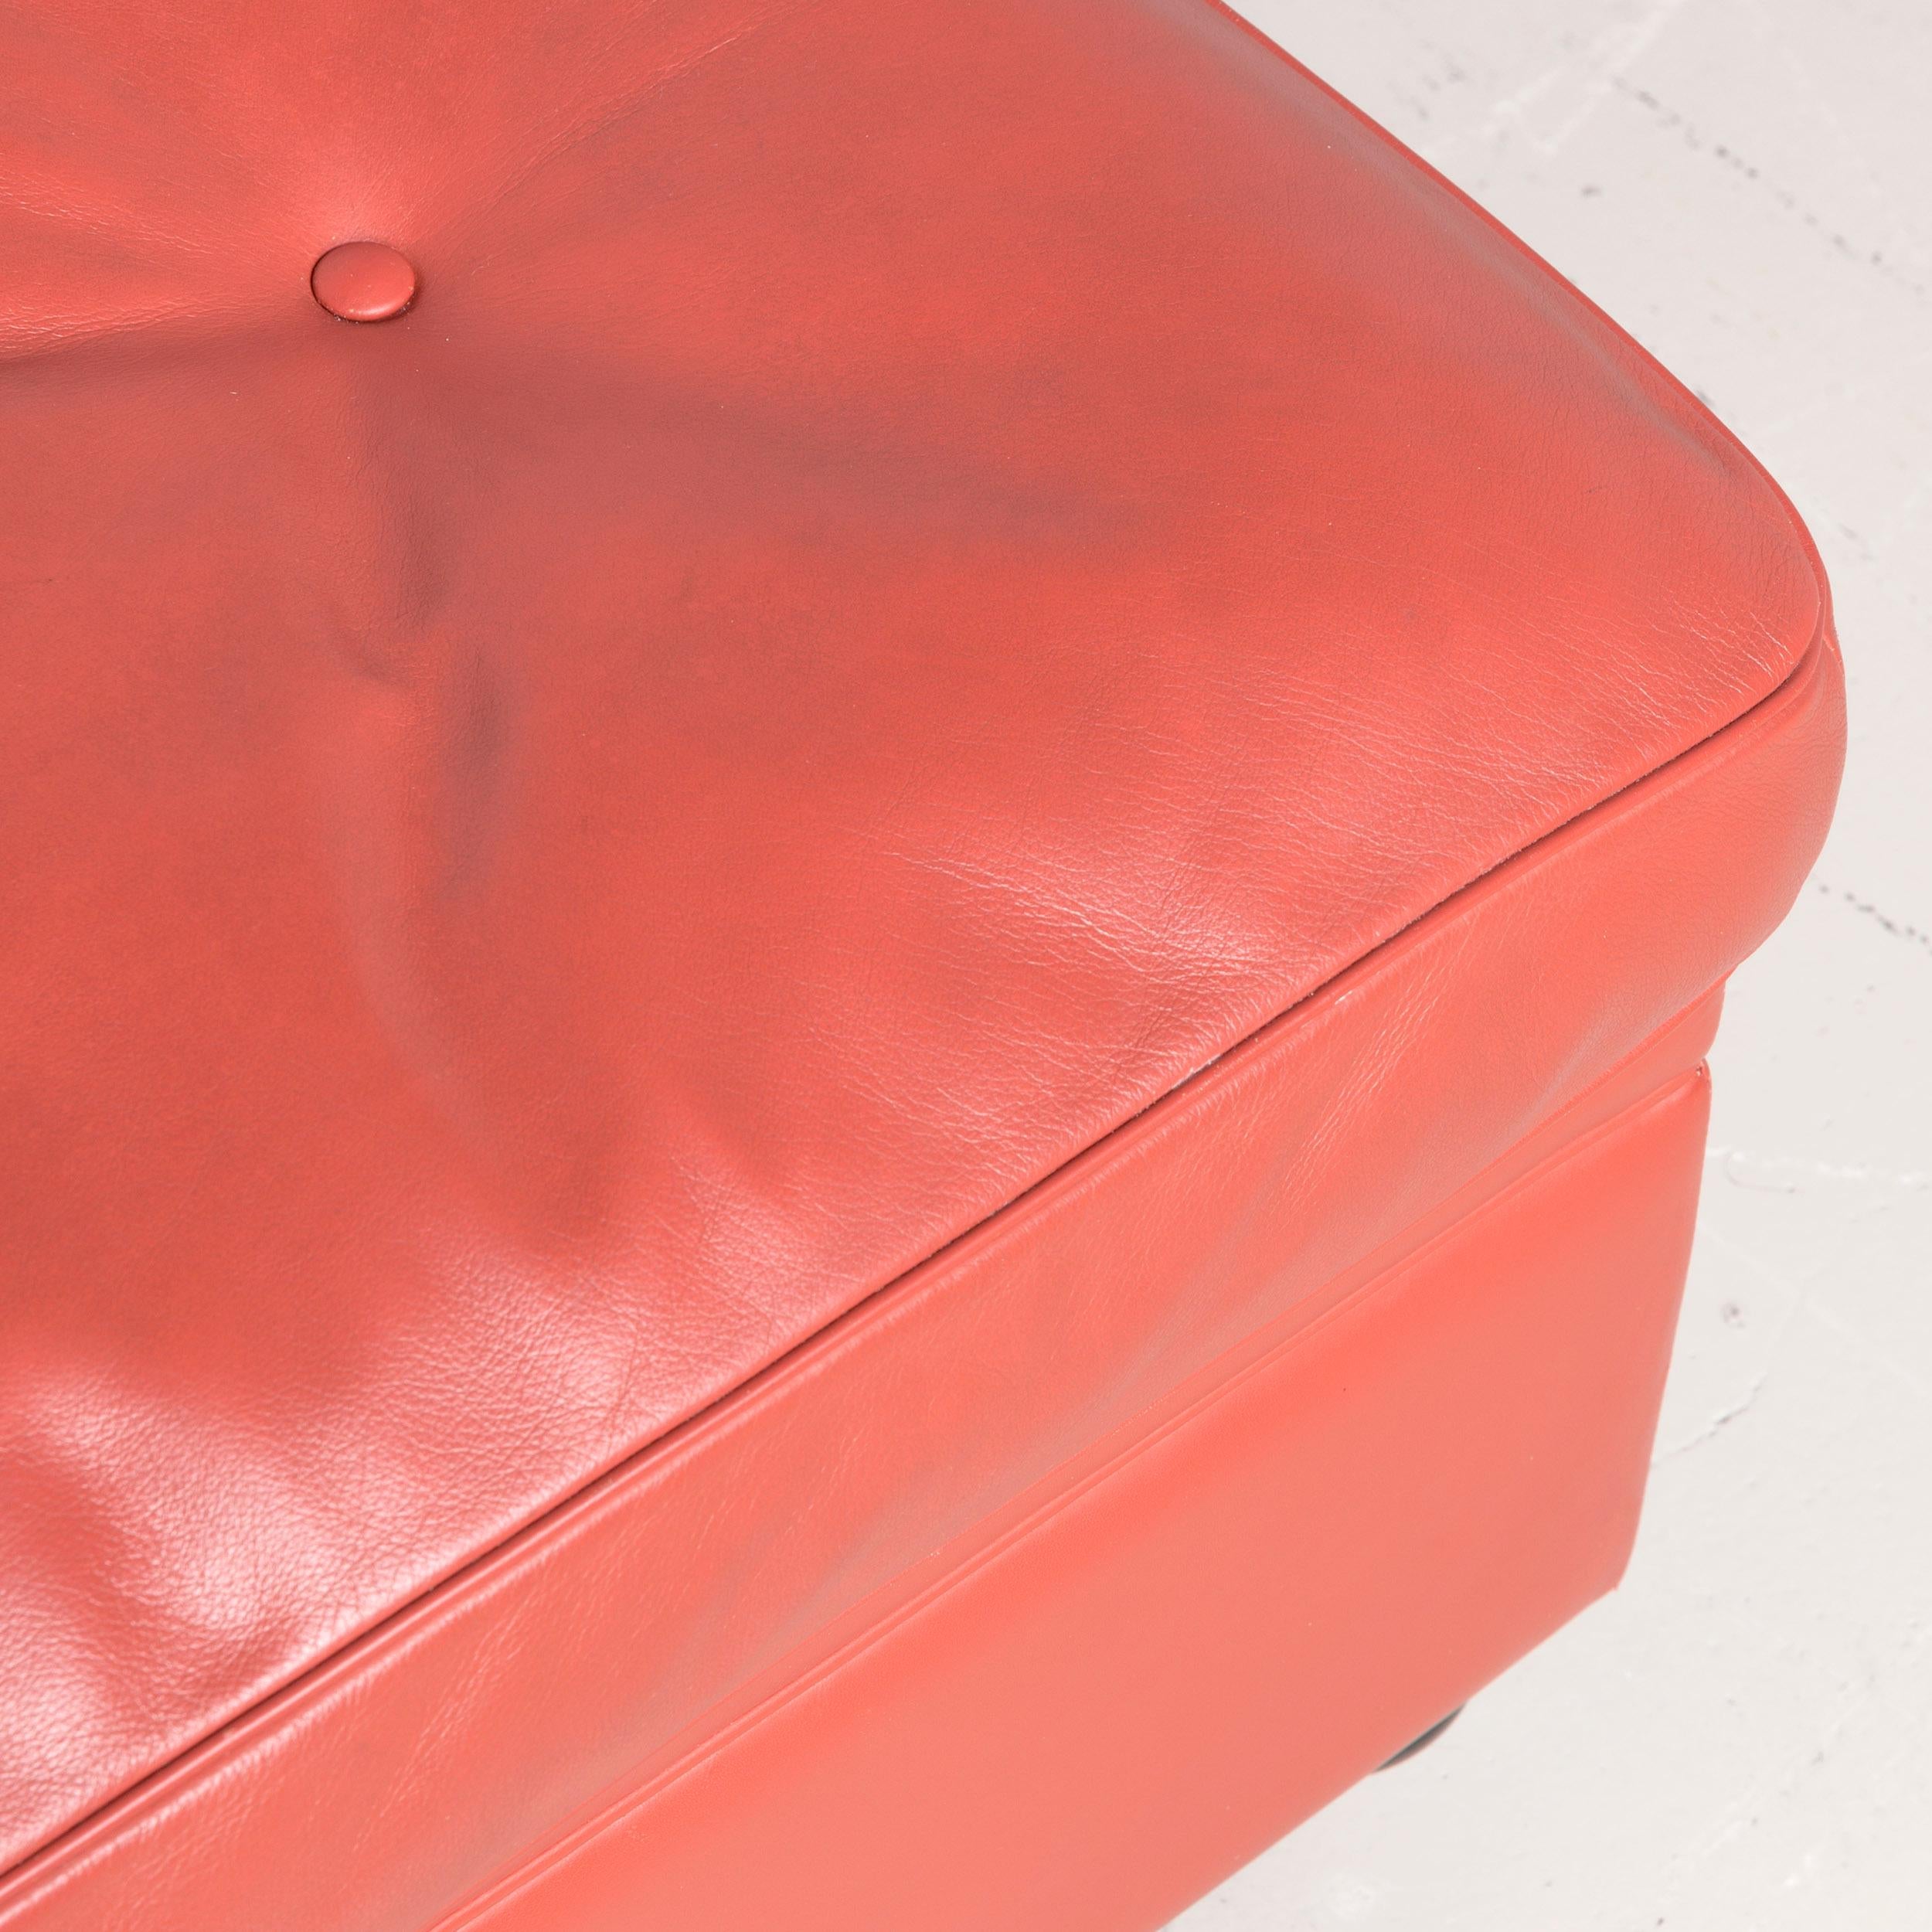 Poltrona Frau Dream on Designer Leather Footstool Orange In Good Condition For Sale In Cologne, DE